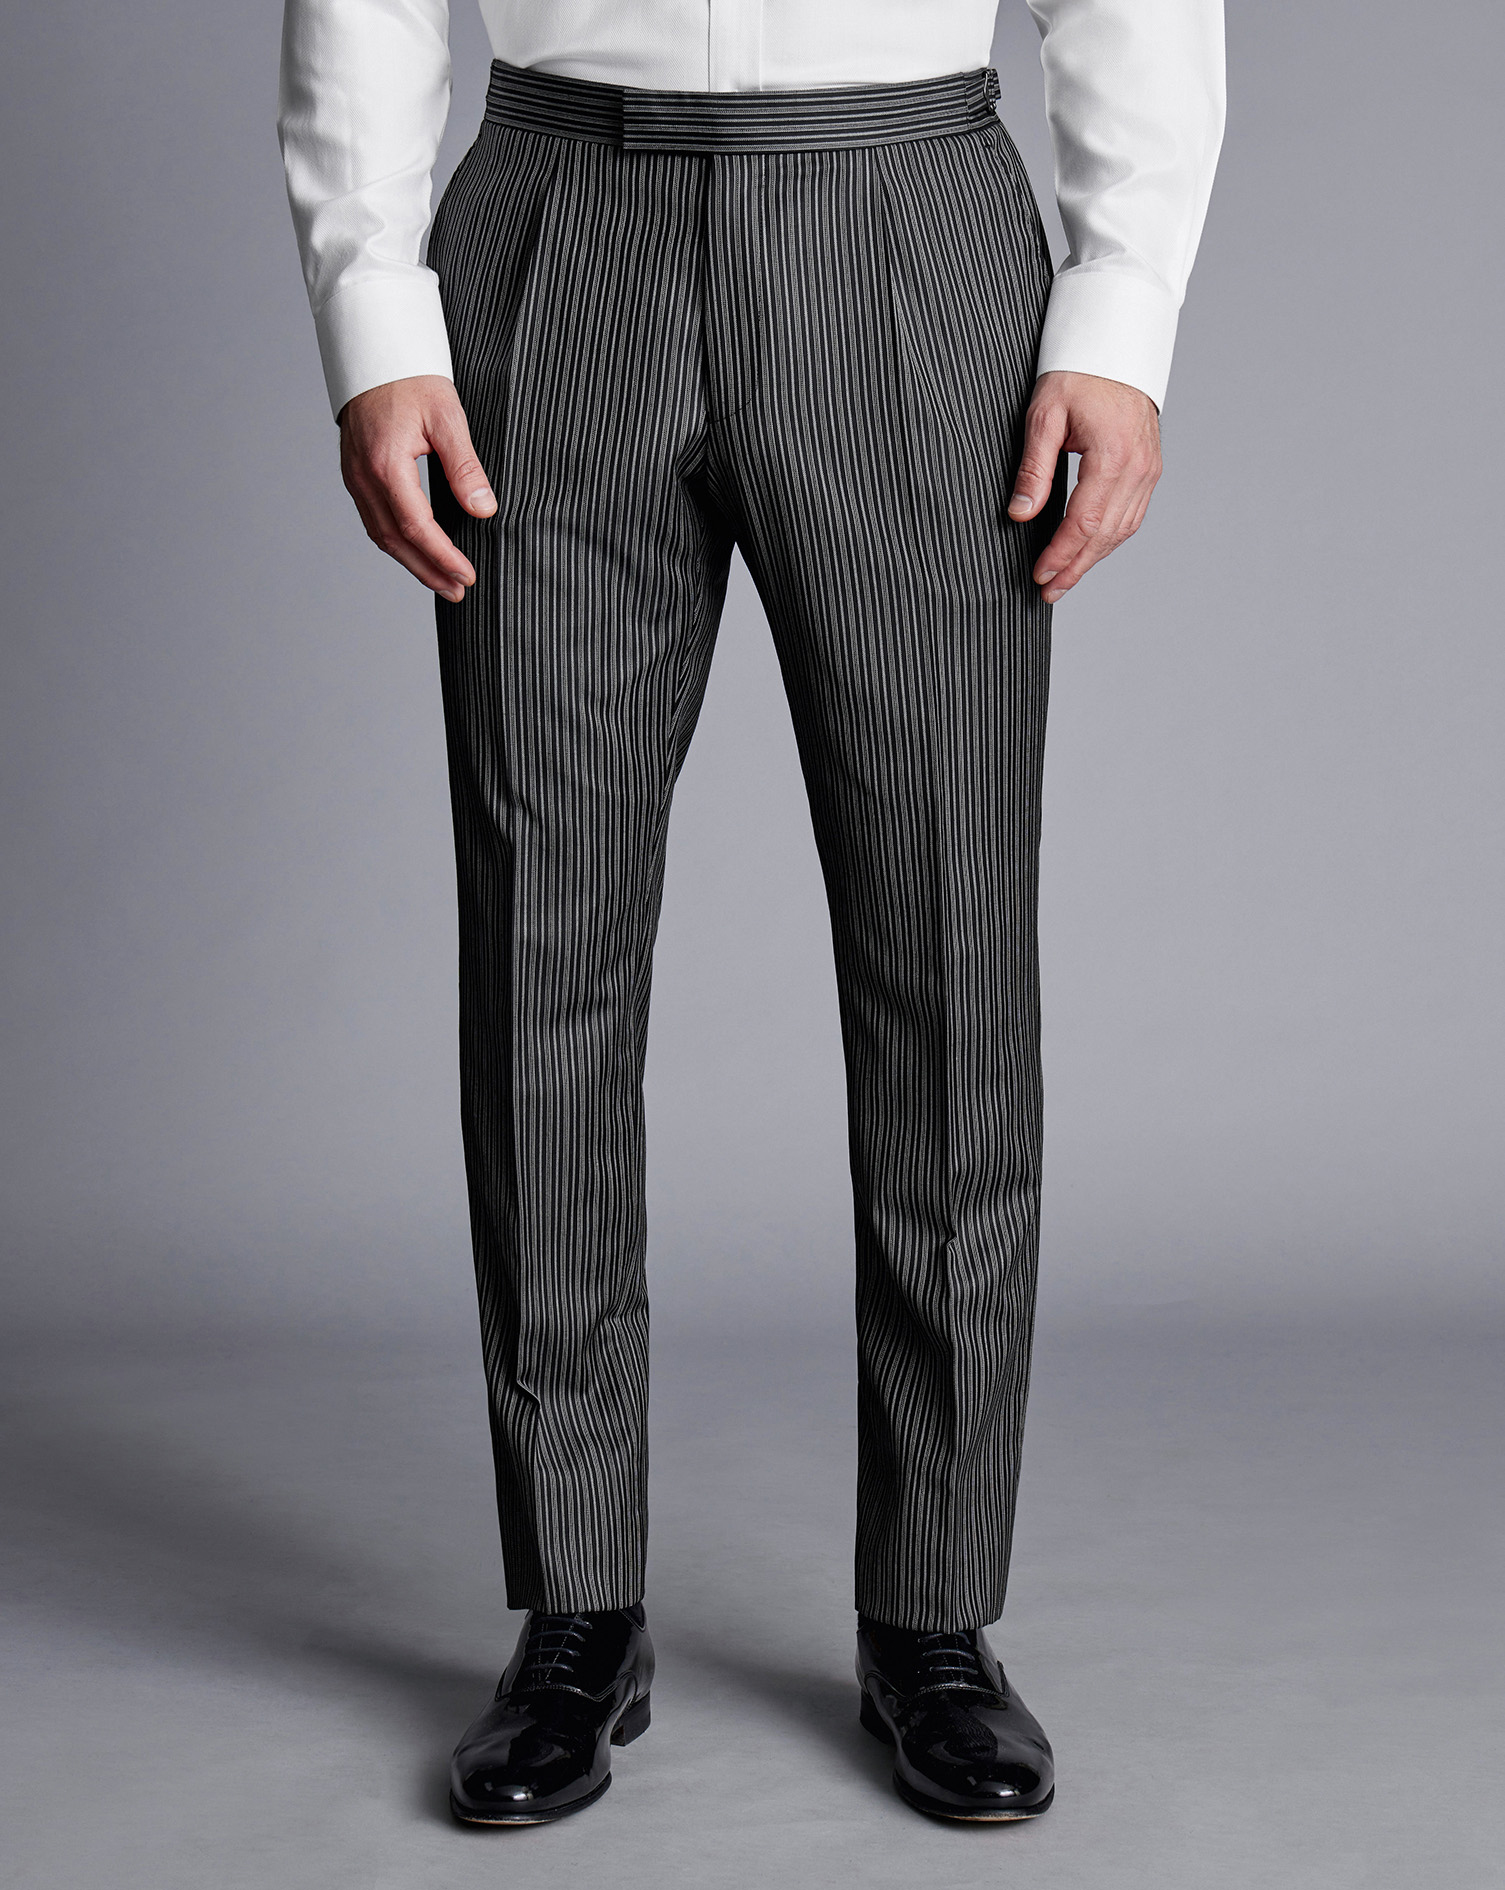 Men's Charles Tyrwhitt Morning Suit Stripe Trousers - Black Size W30 L30 Wool
